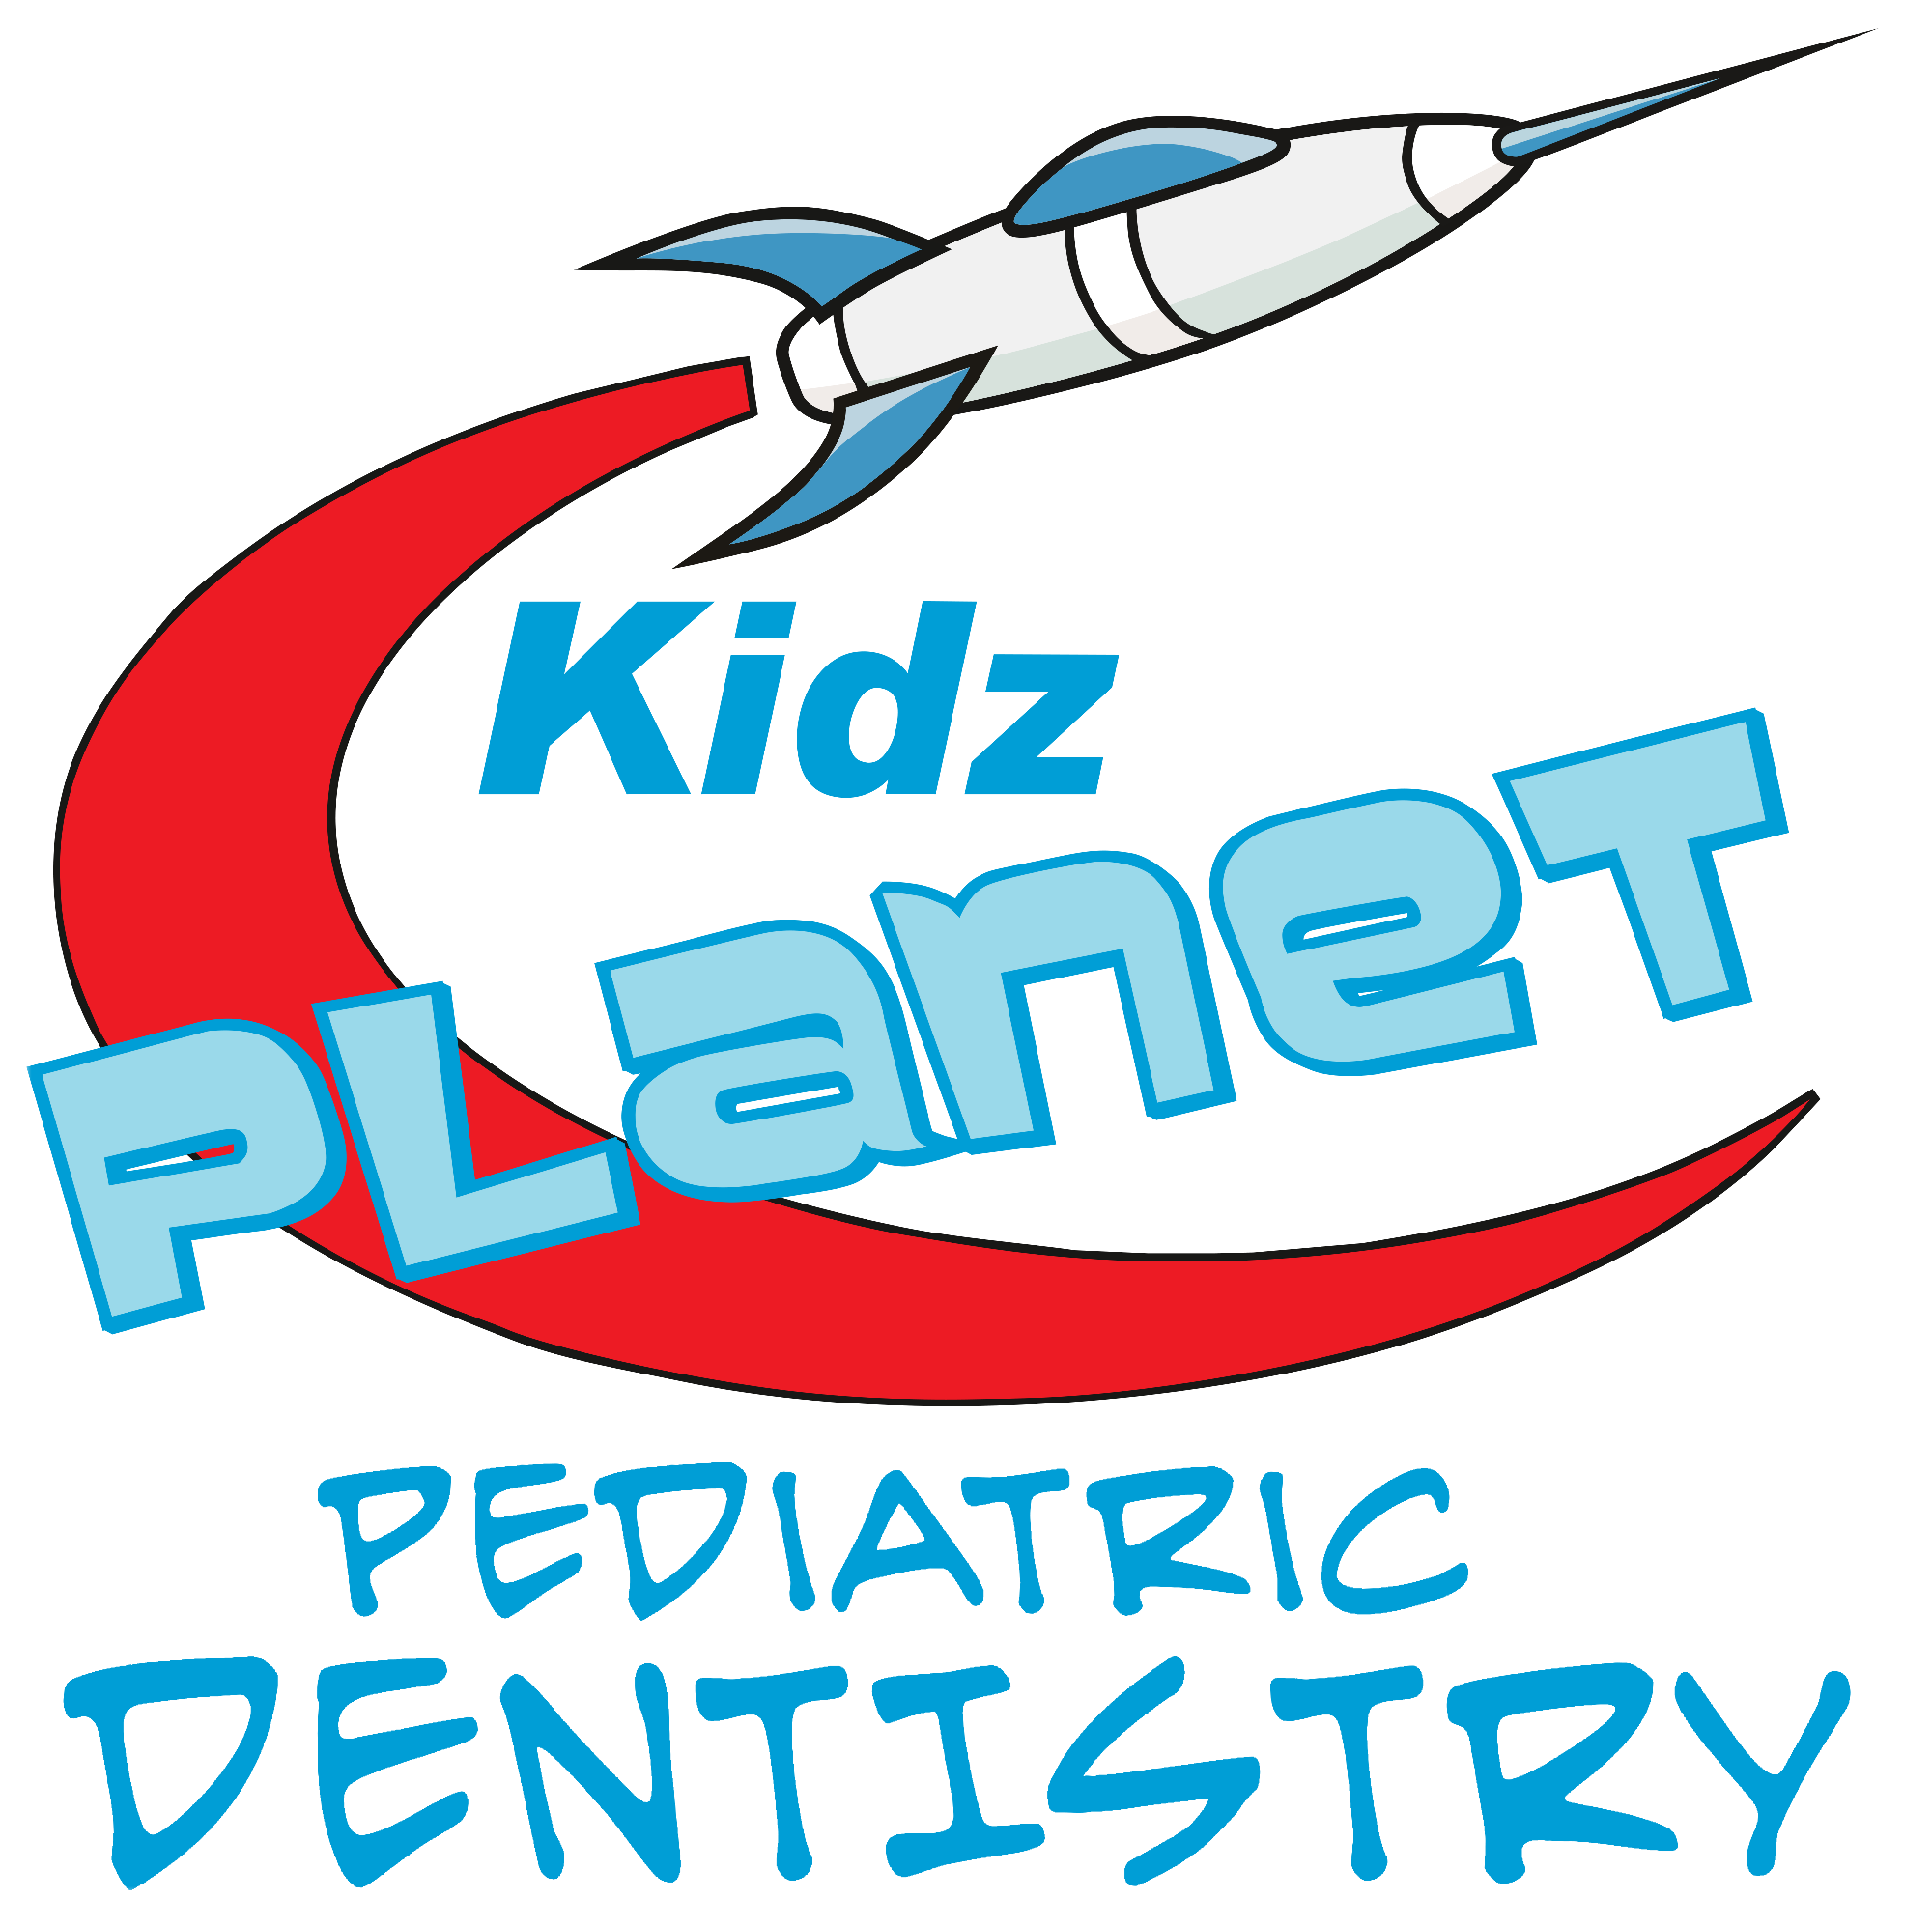 Kidz planet pediatric dentistry. Dentist clipart dental history